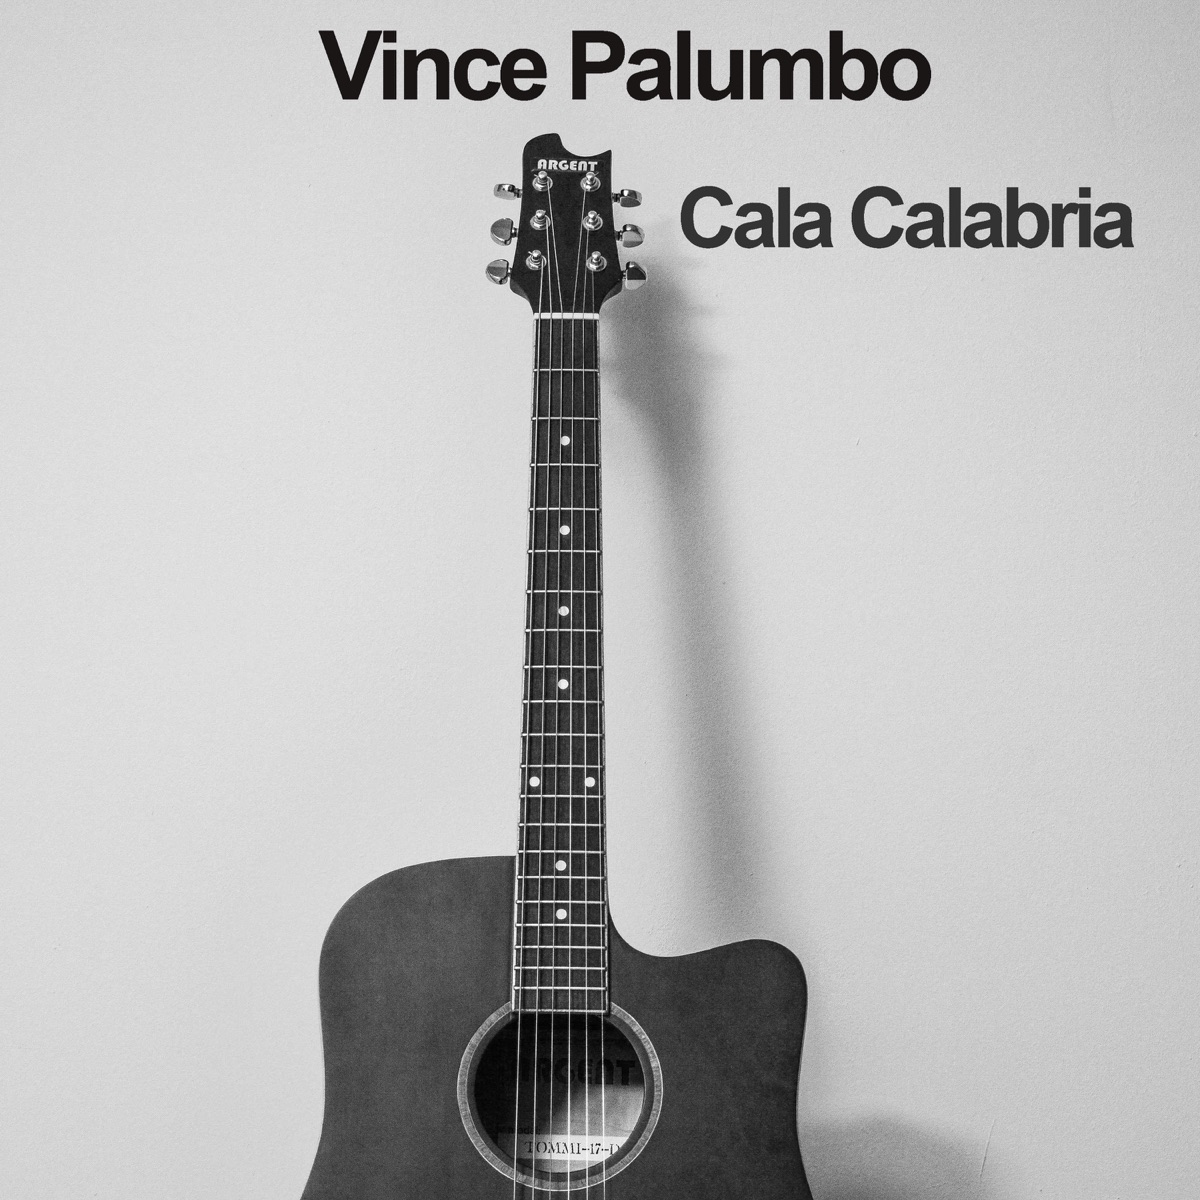 Brucia La Terra (Il Padrino) - Single by Vince Palumbo on Apple Music